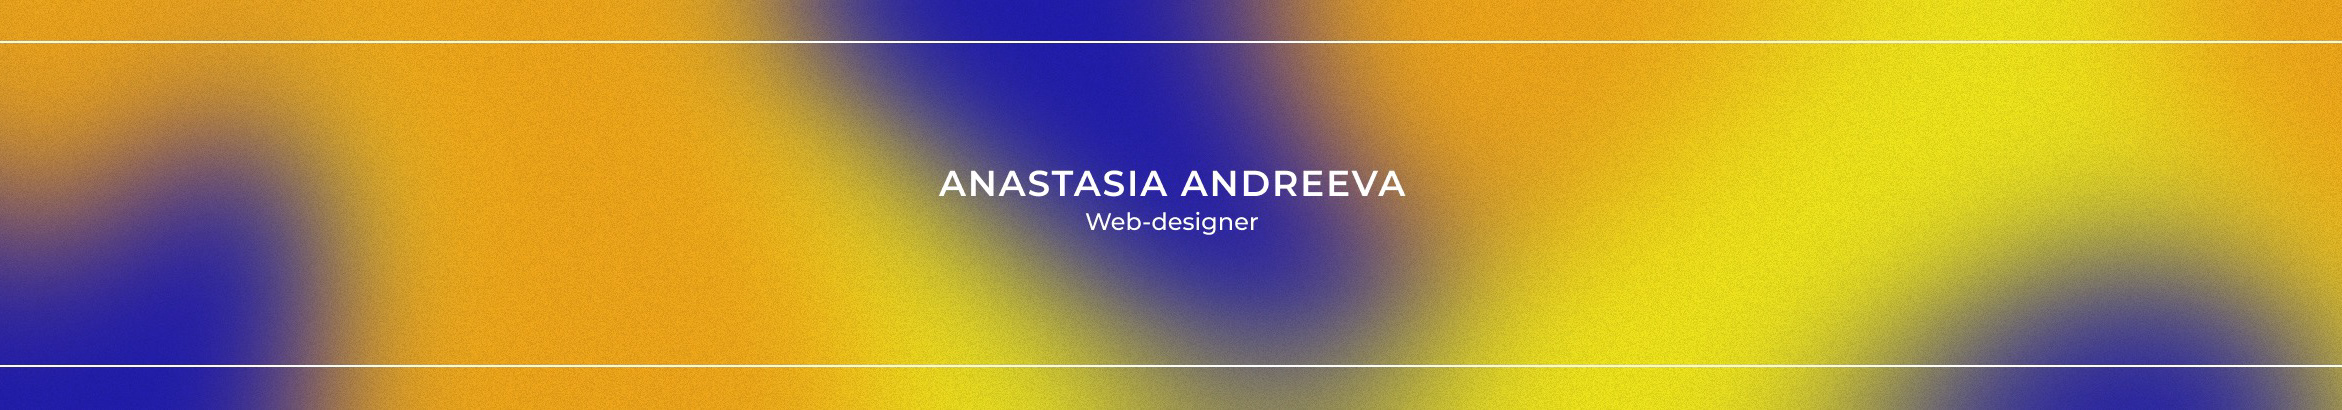 Bannière de profil de Anastasia Andreeva